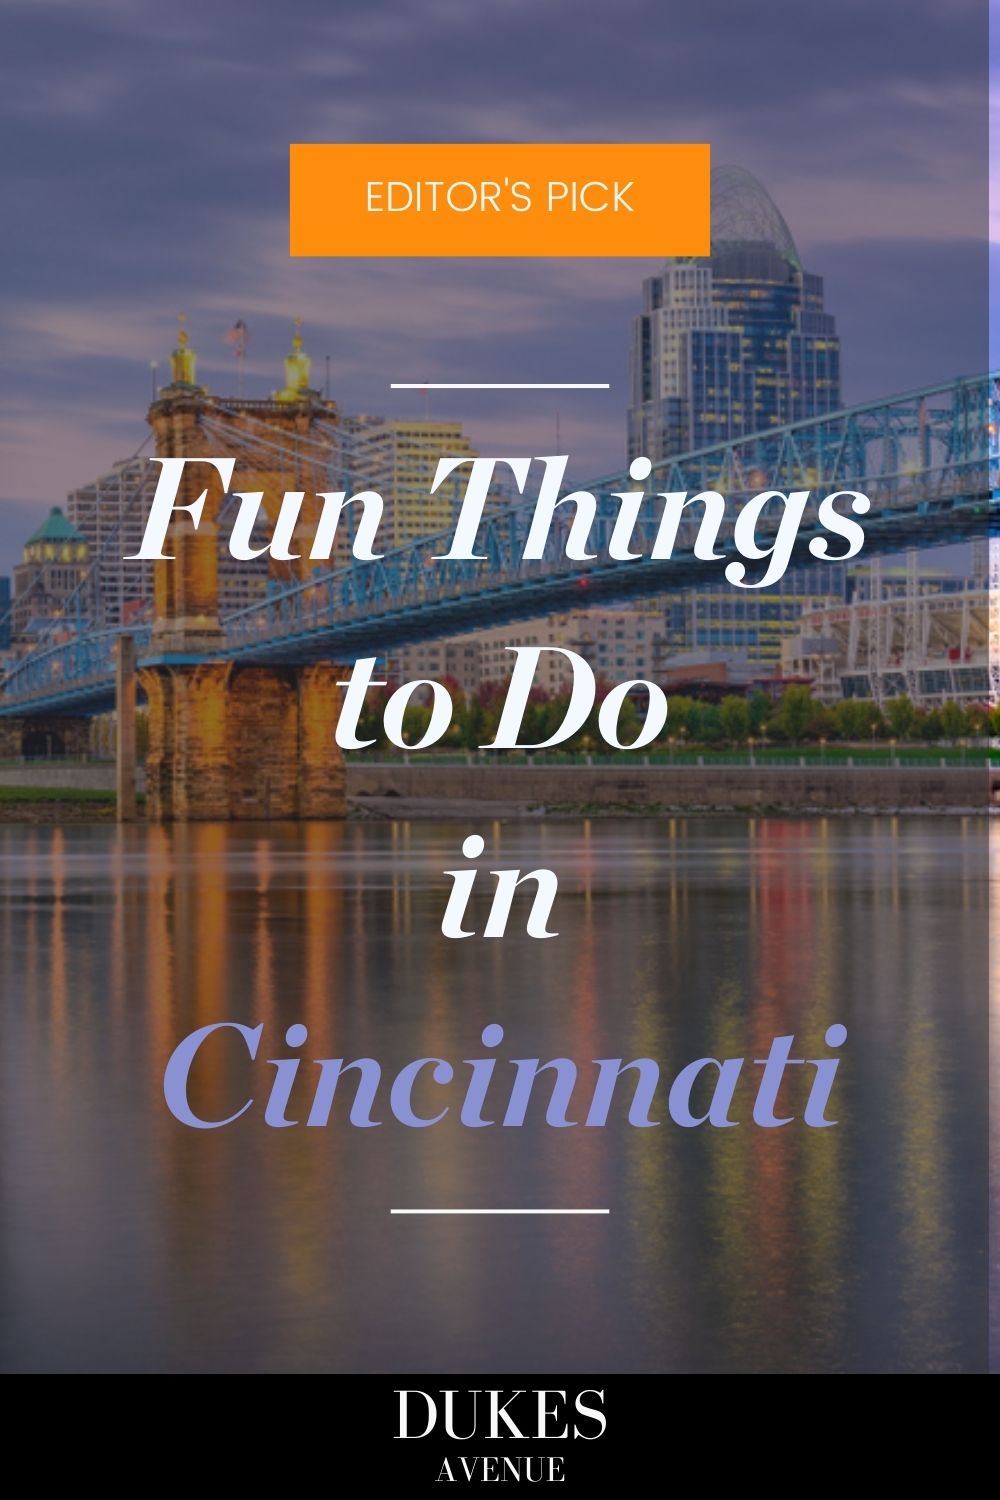 Aerial shot of Cincinnati skyline with text overlay 'Fun Things To Do In Cincinnati'